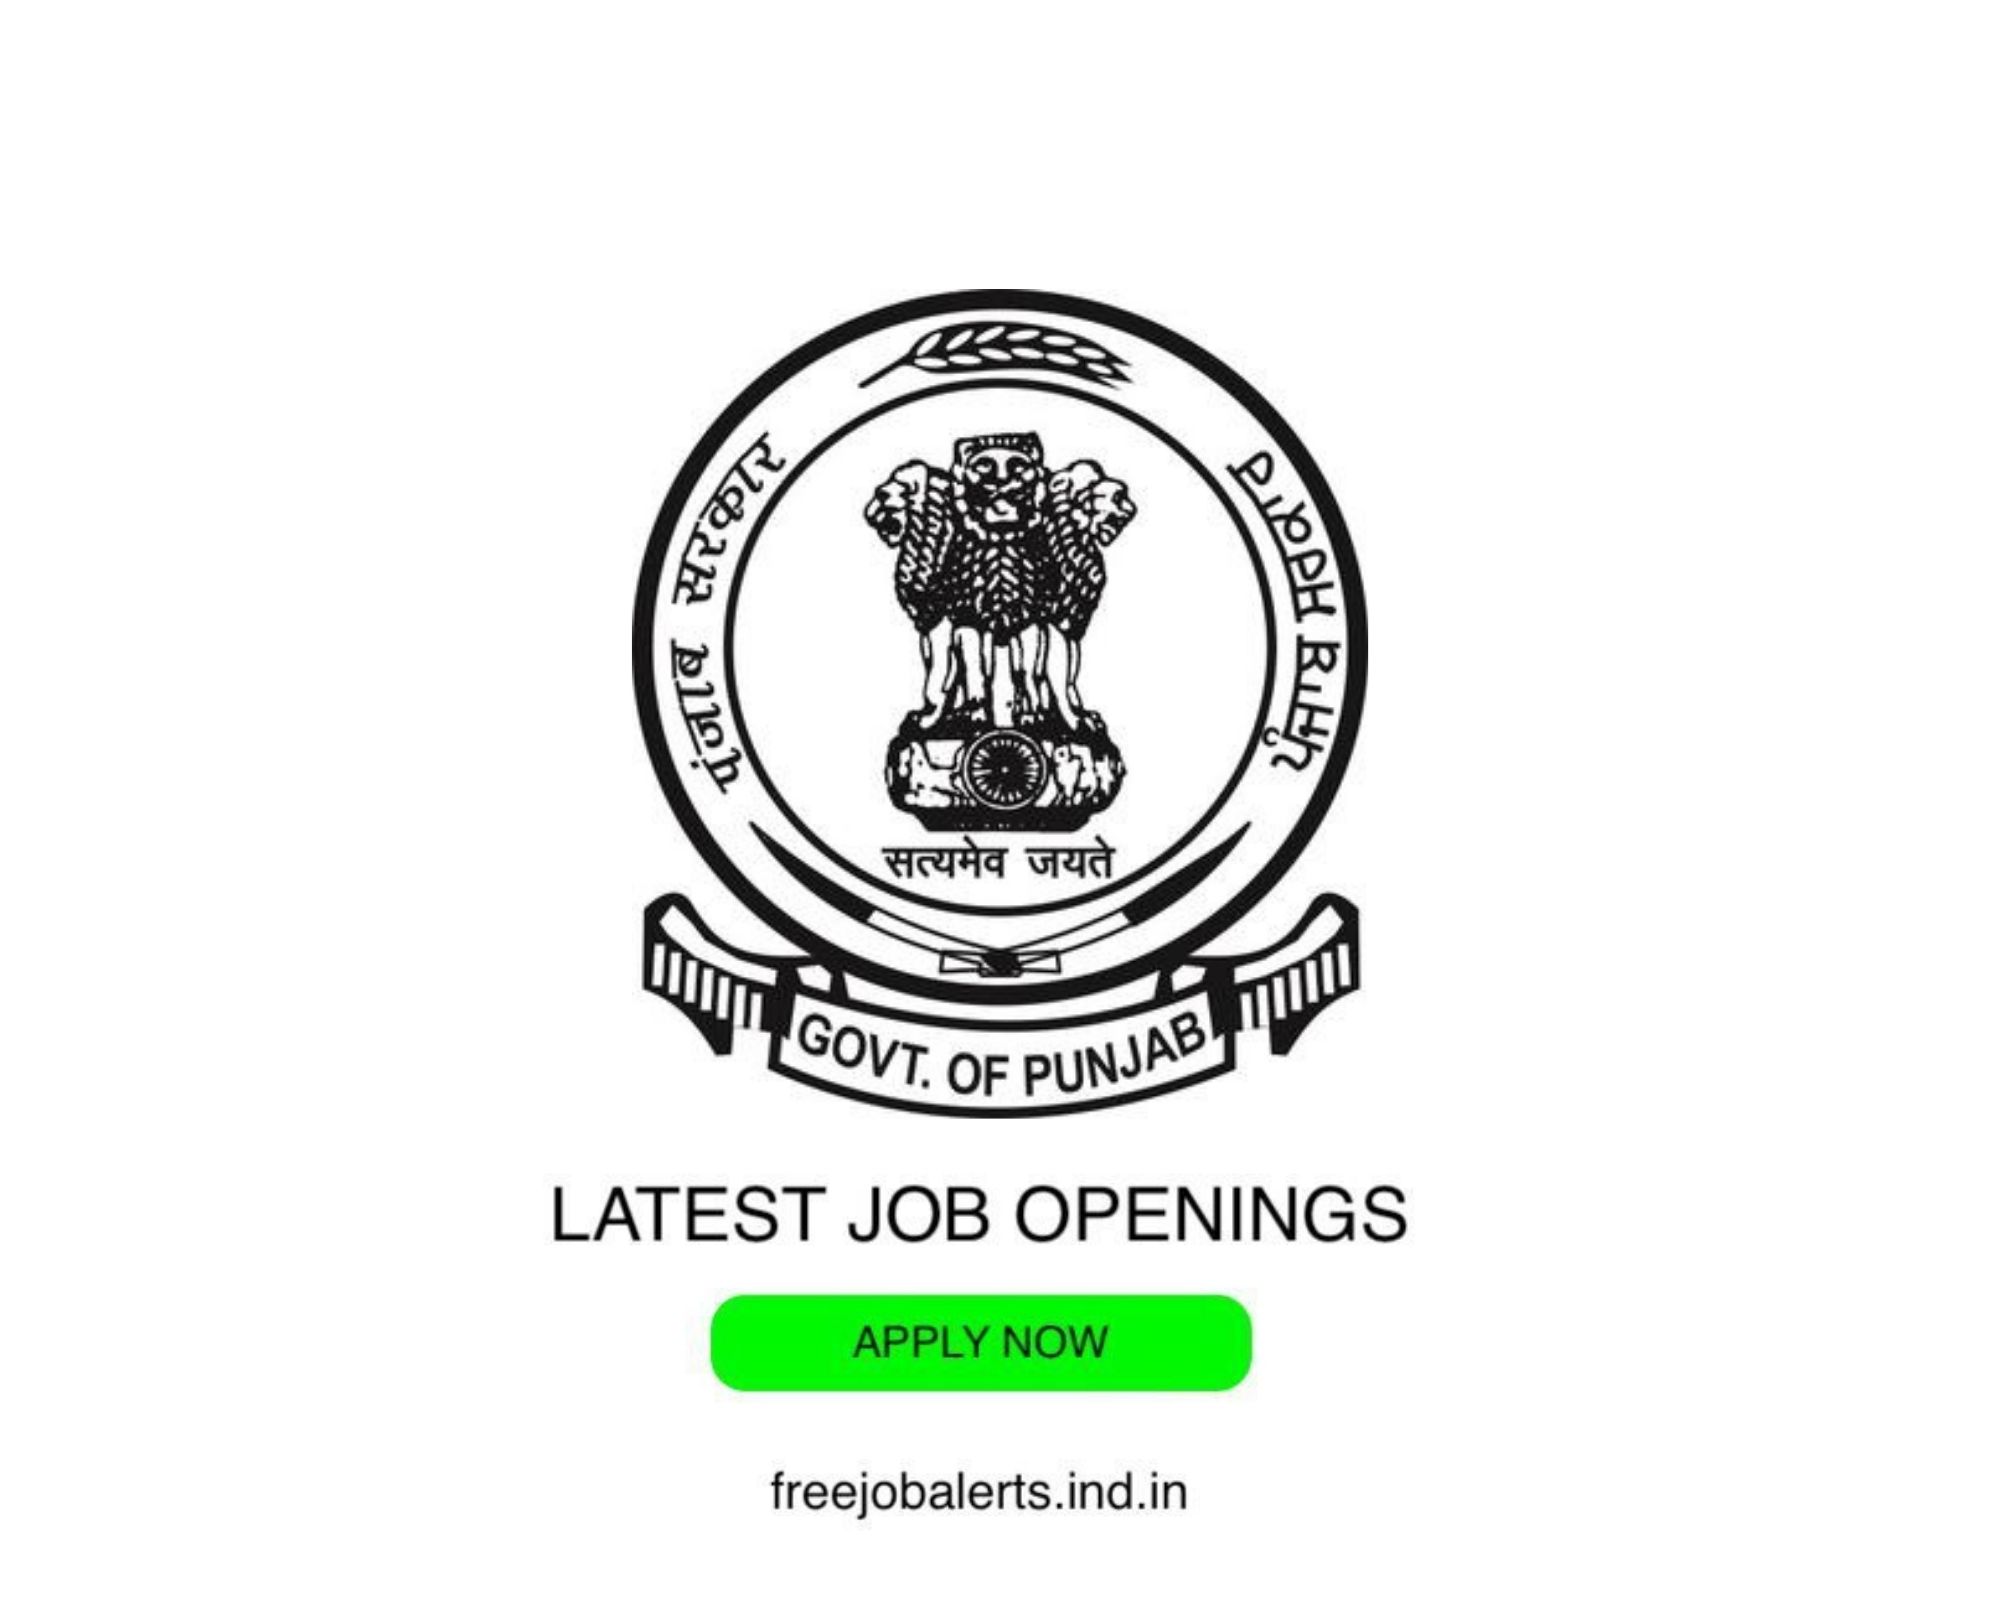 PPSC- Punjab Public Service Commission- Latest Govt job openings - Free job alerts, Indian Govt Jobs